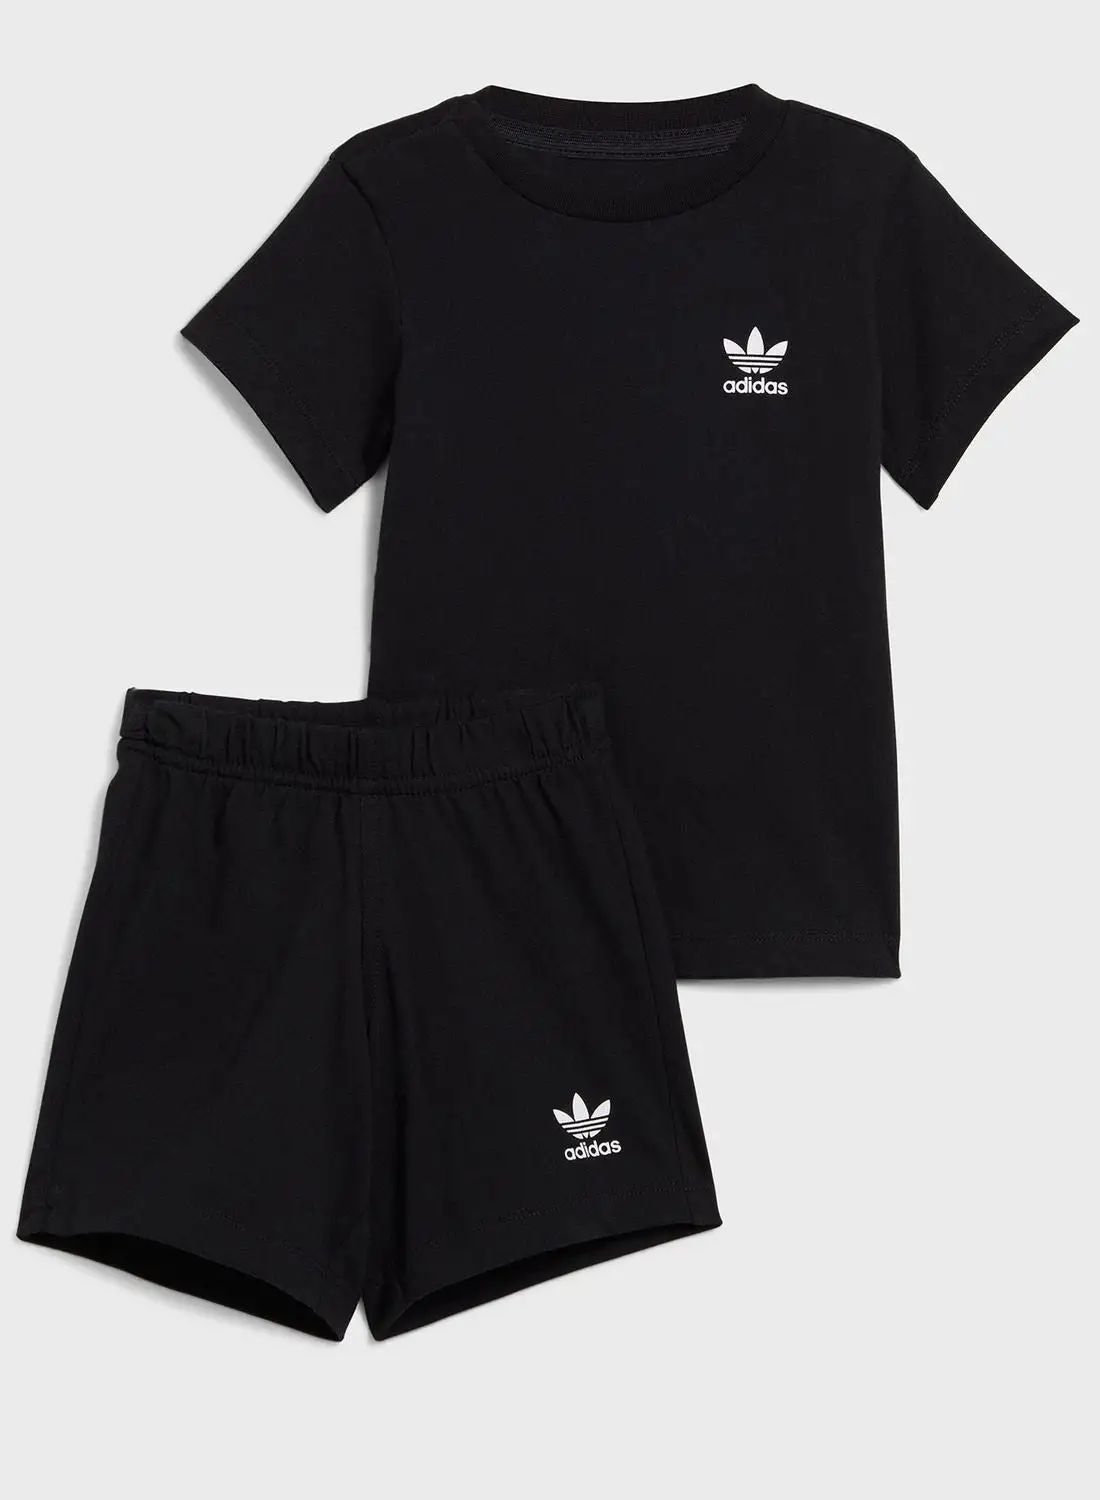 adidas Originals Kids Adicolor Shorts T-shirt Set